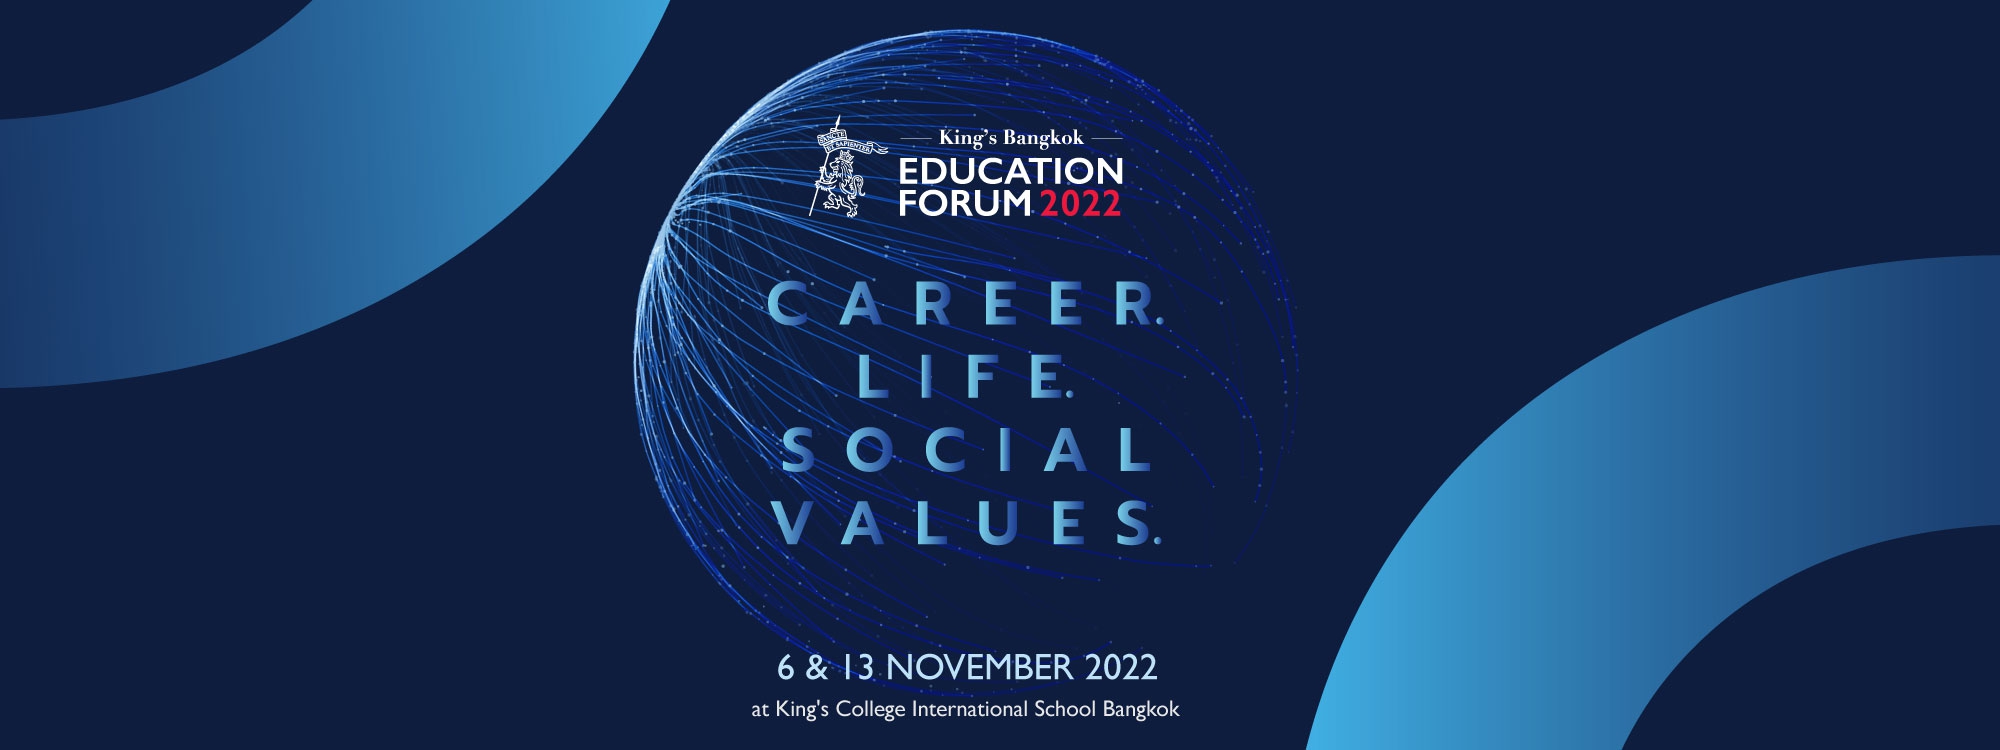 King’s Bangkok Education Forum 2022: Career, Life, Social Values